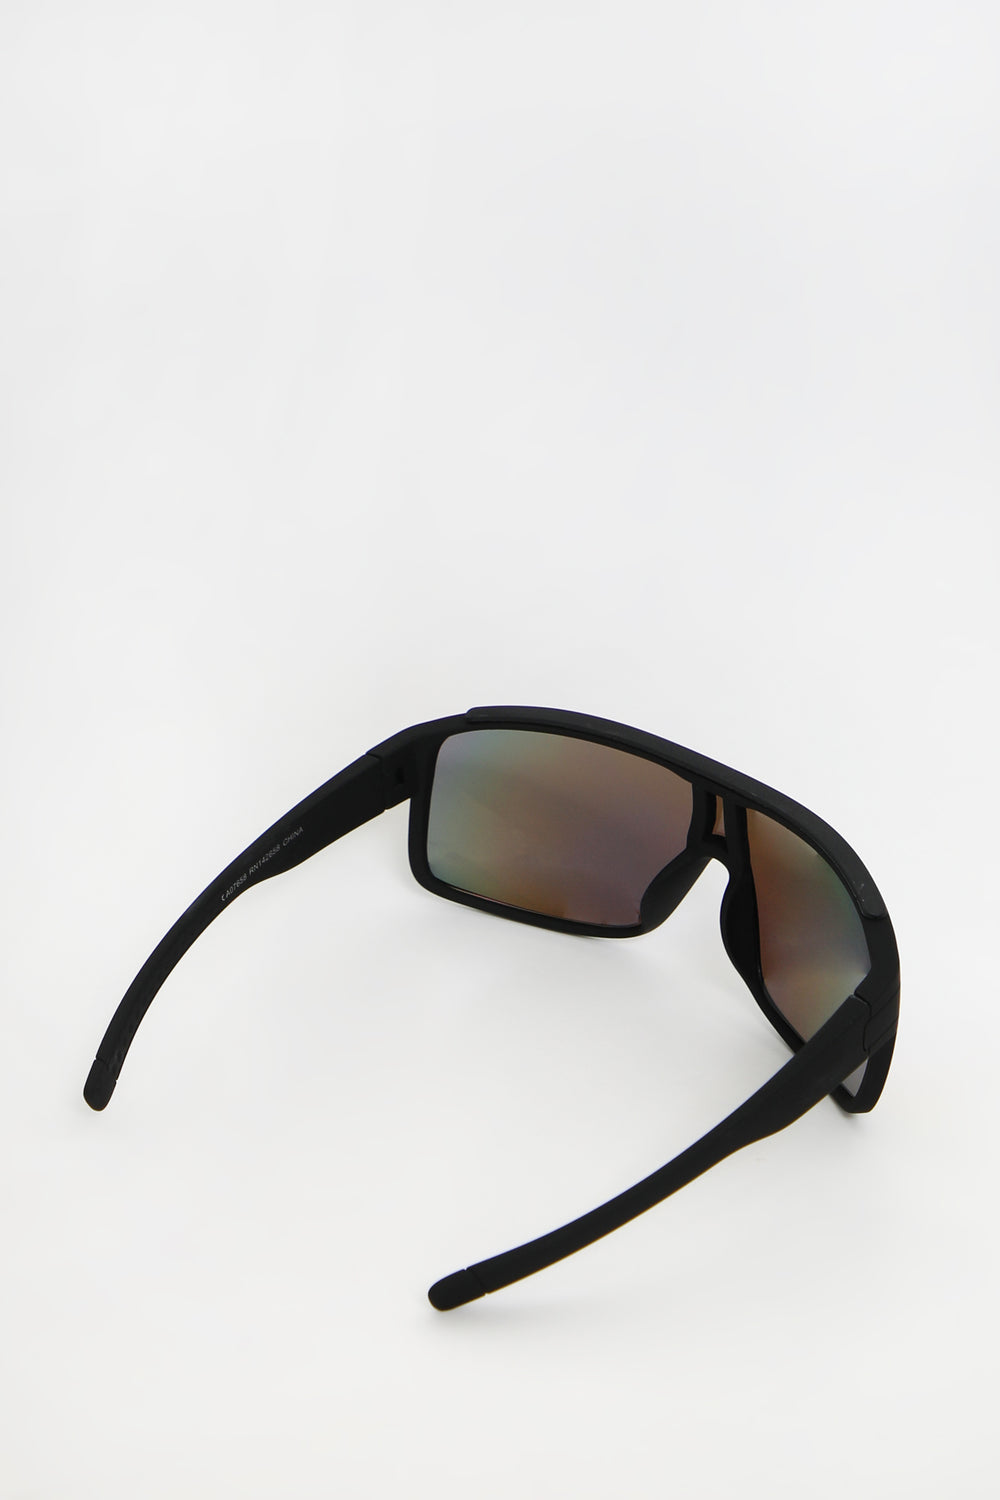 West49 Revo Shield Sunglasses West49 Revo Shield Sunglasses